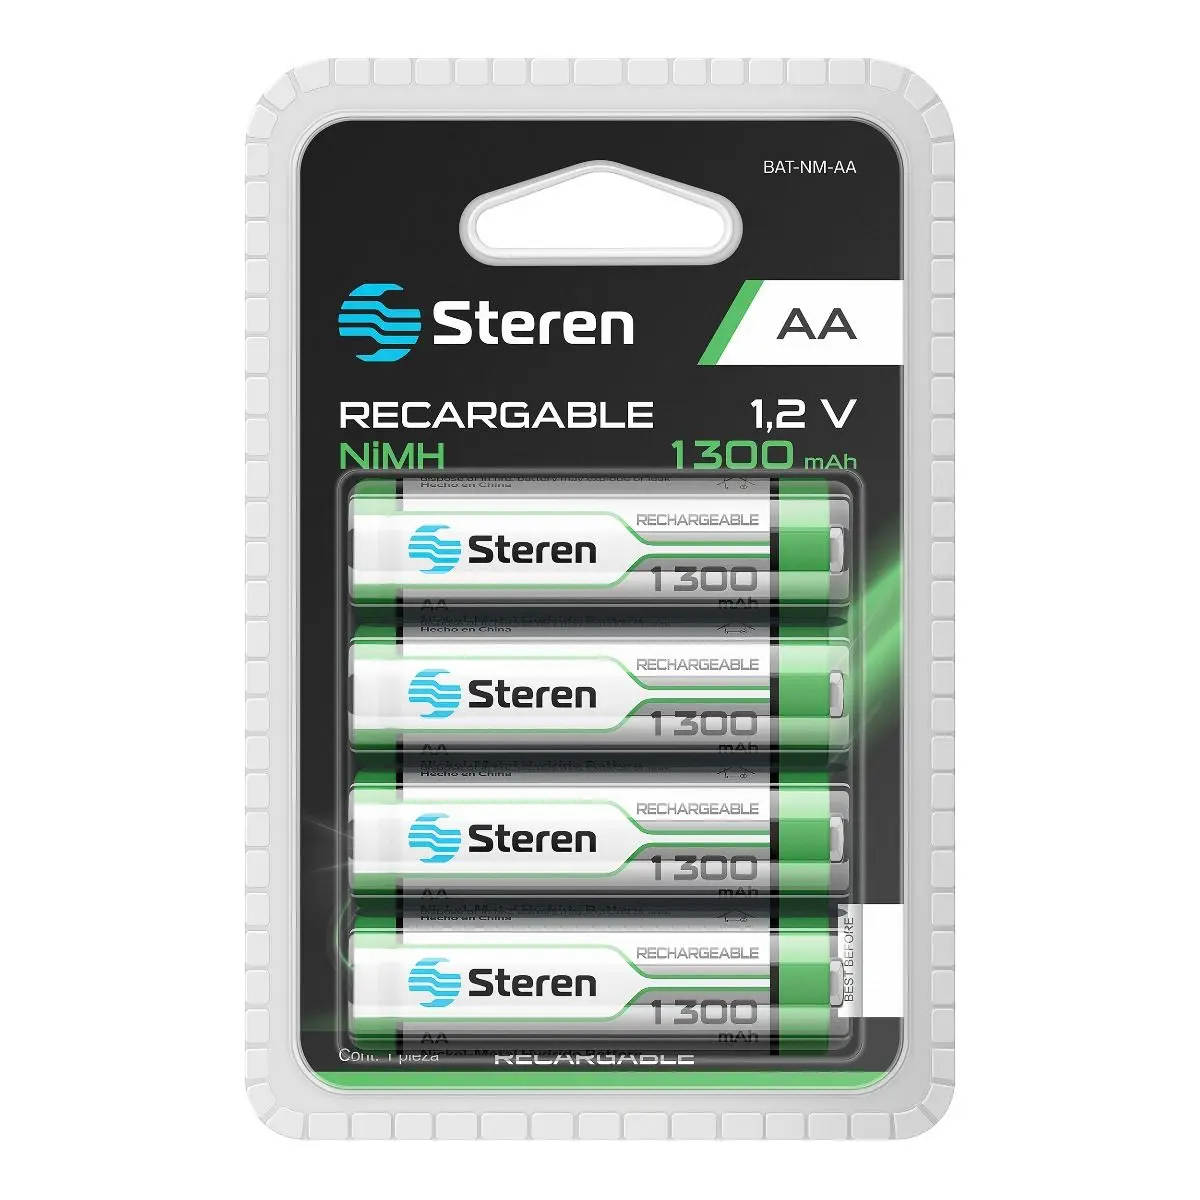 baterias recargables steren - Qué tan buenas son las pilas recargables Steren